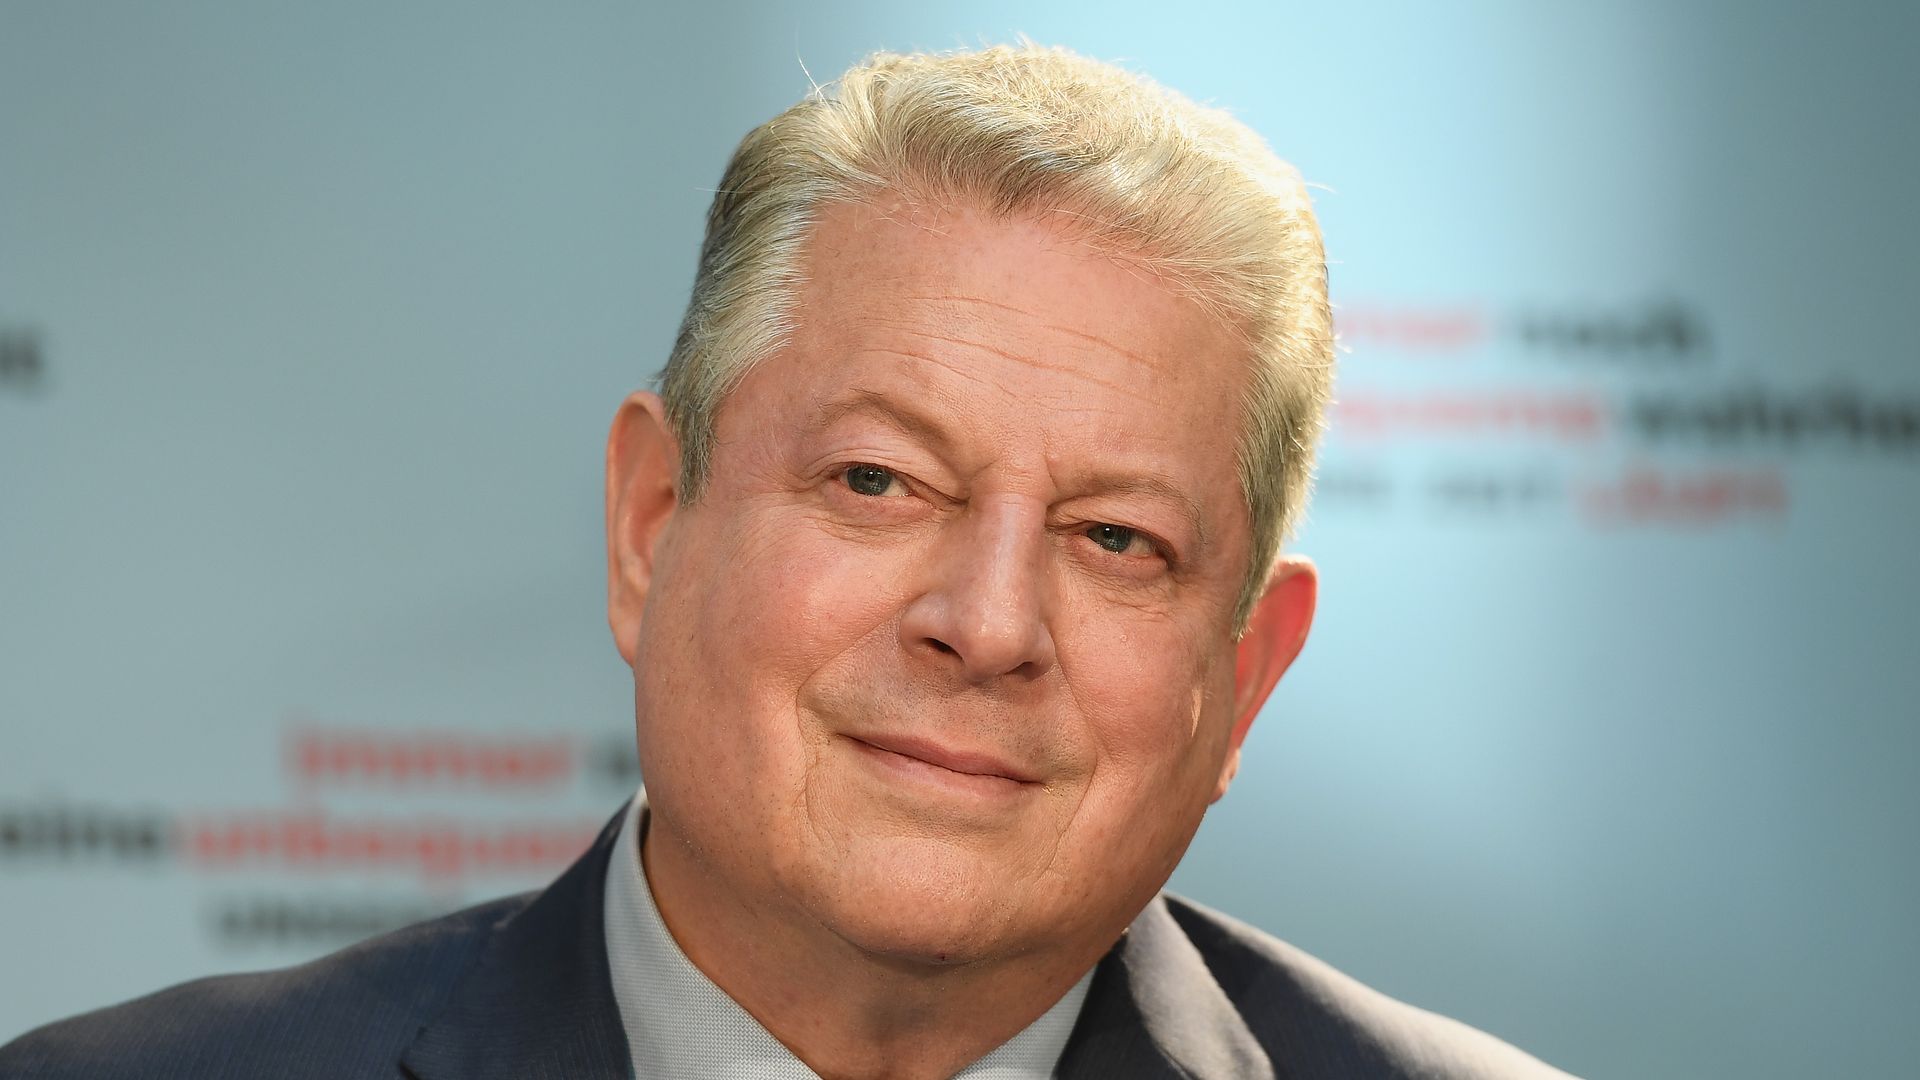 Al Gore wearing suit and tie 